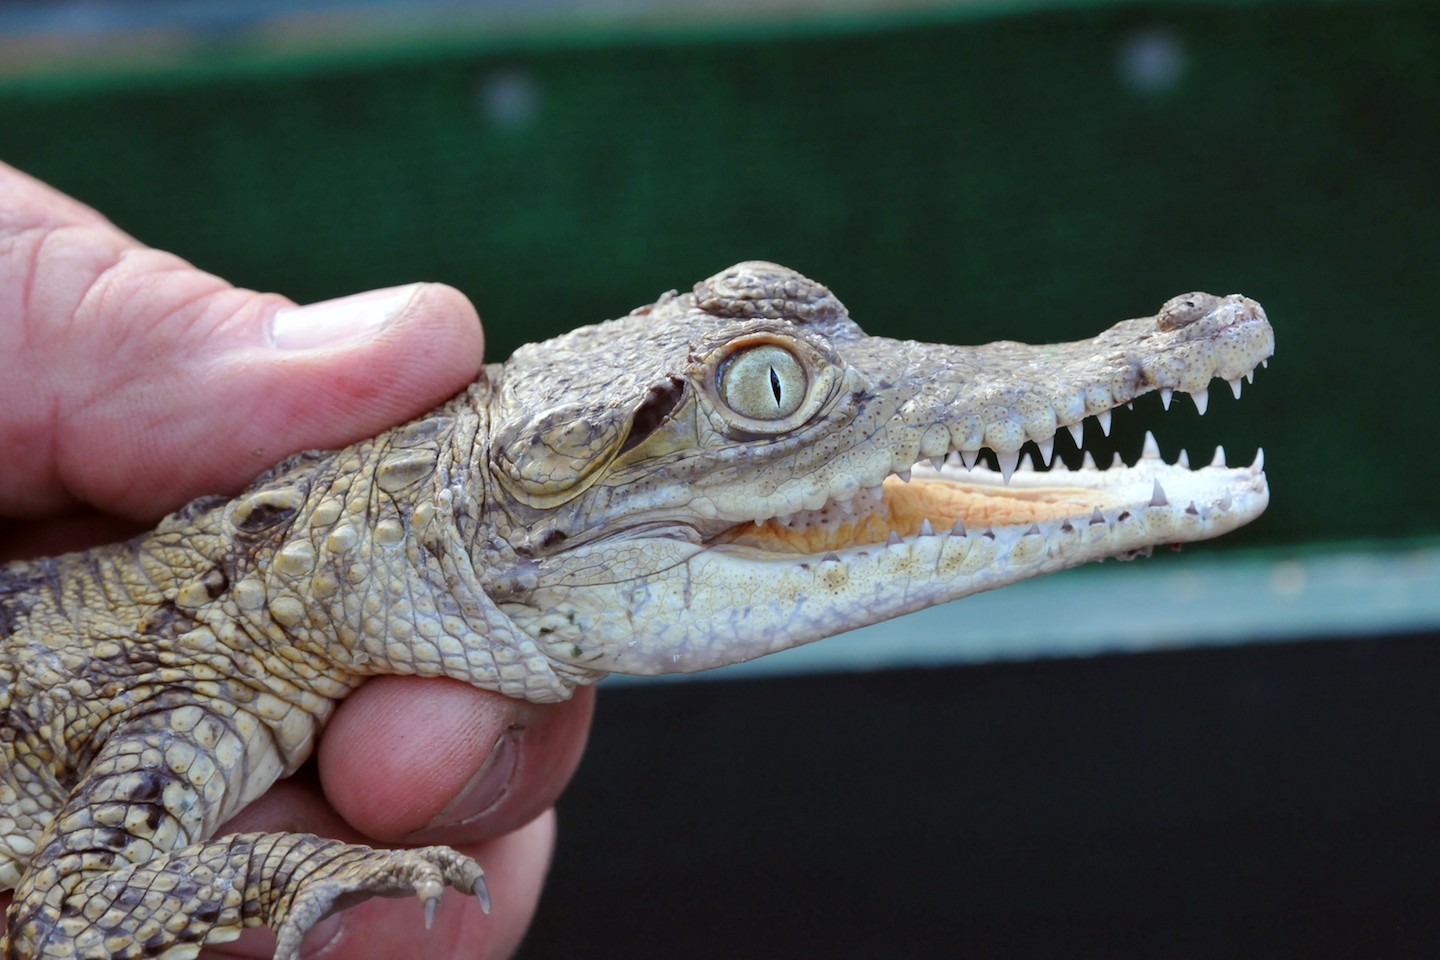 Hermès Opens an Alligator Farm in Australia to Make Luxury Goods